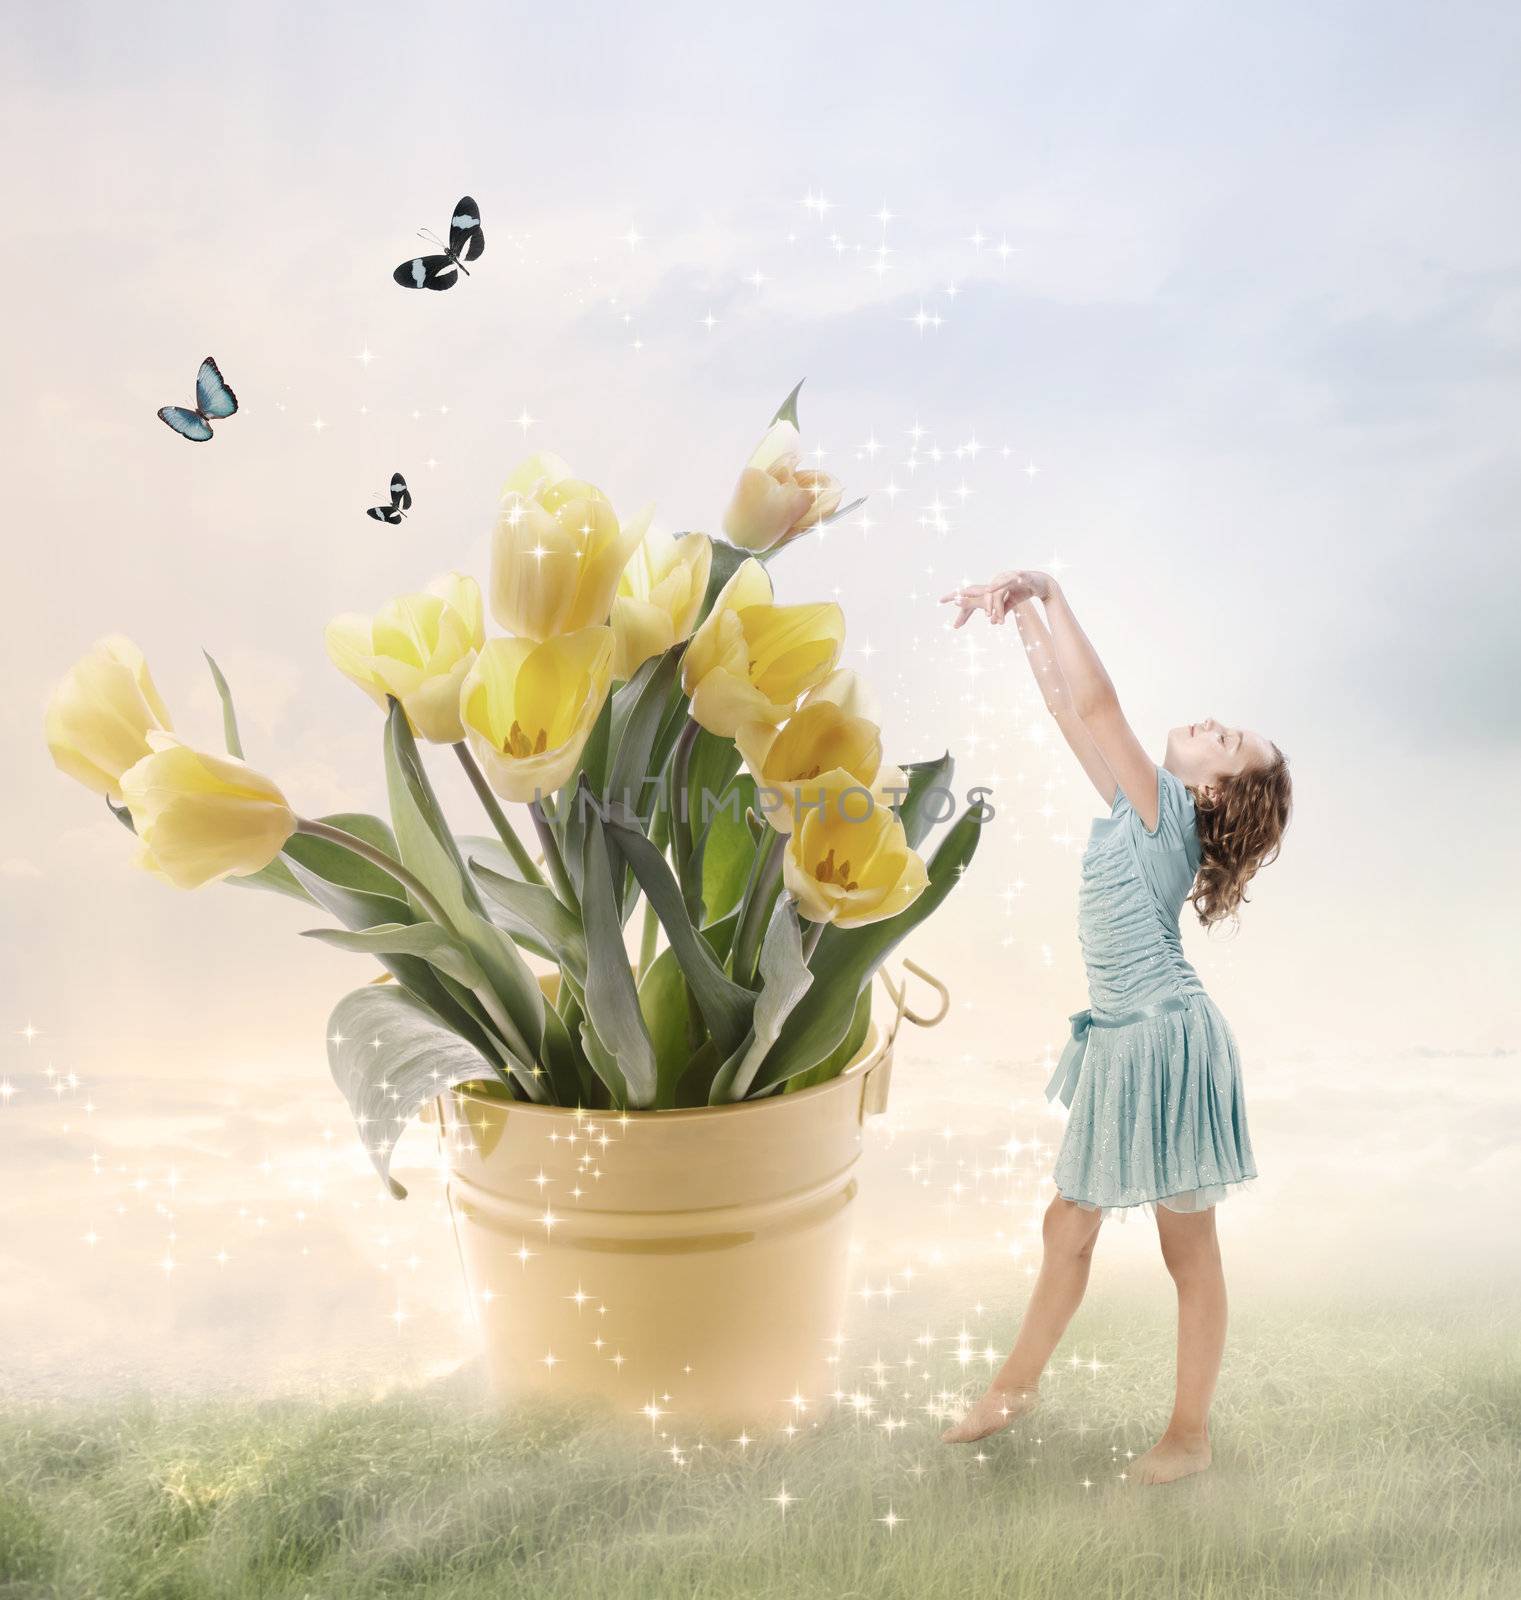 Little Girl with Big Flowers  by melpomene